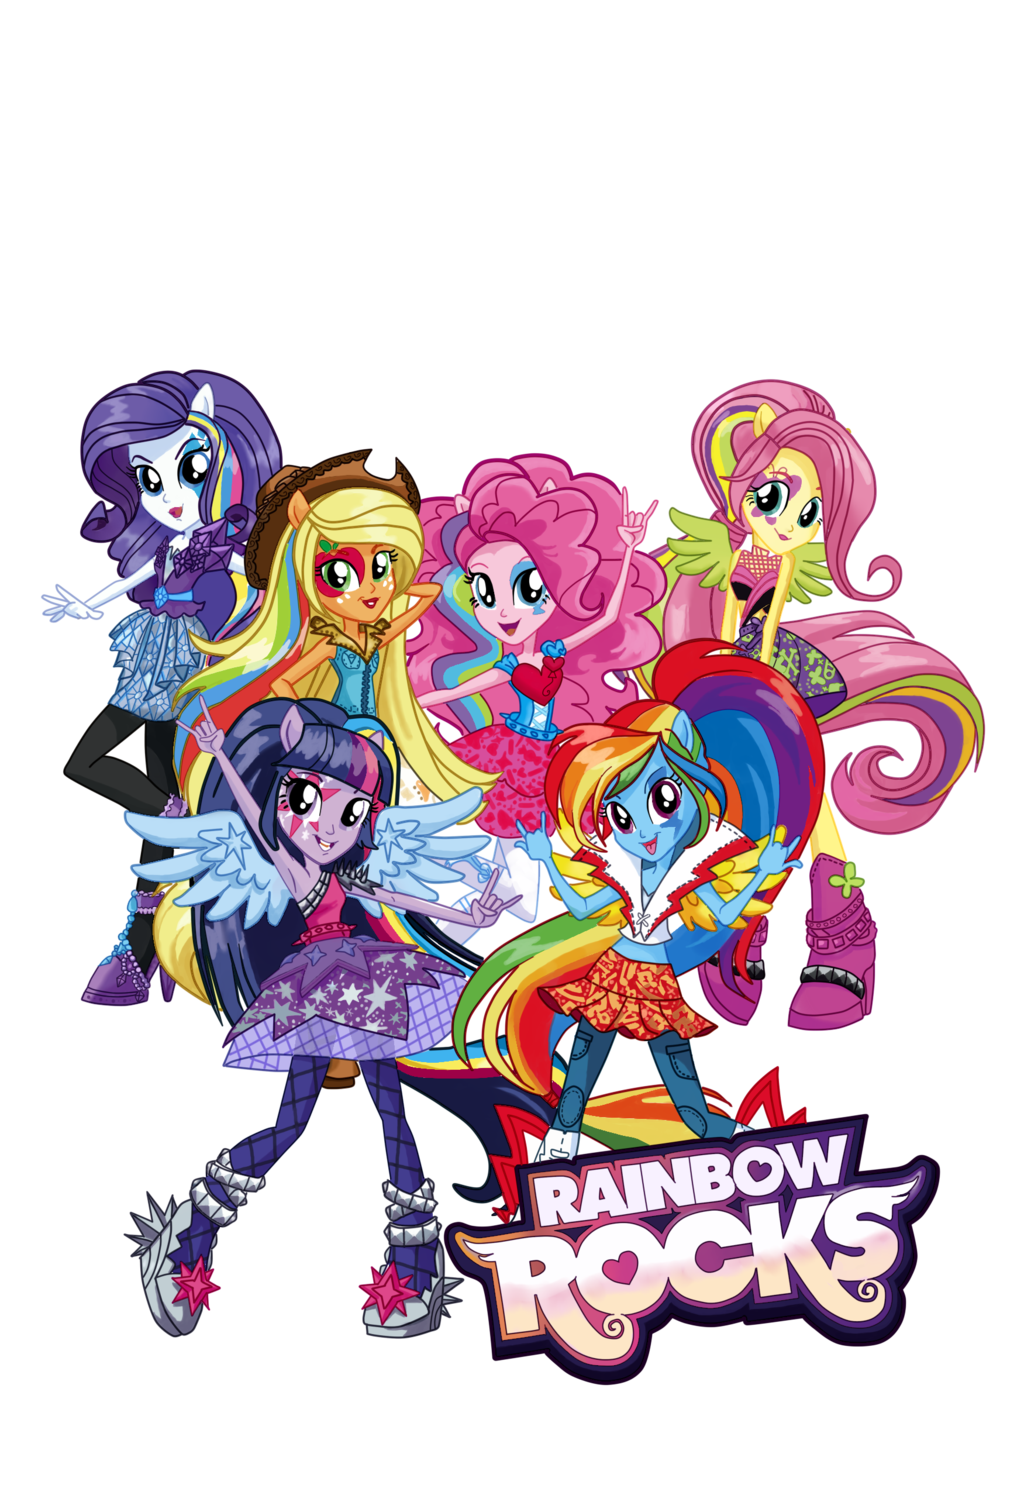 Mlp: Equestria girls Rainbow rocks. Little pony, My little pony wallpaper, My little pony picture